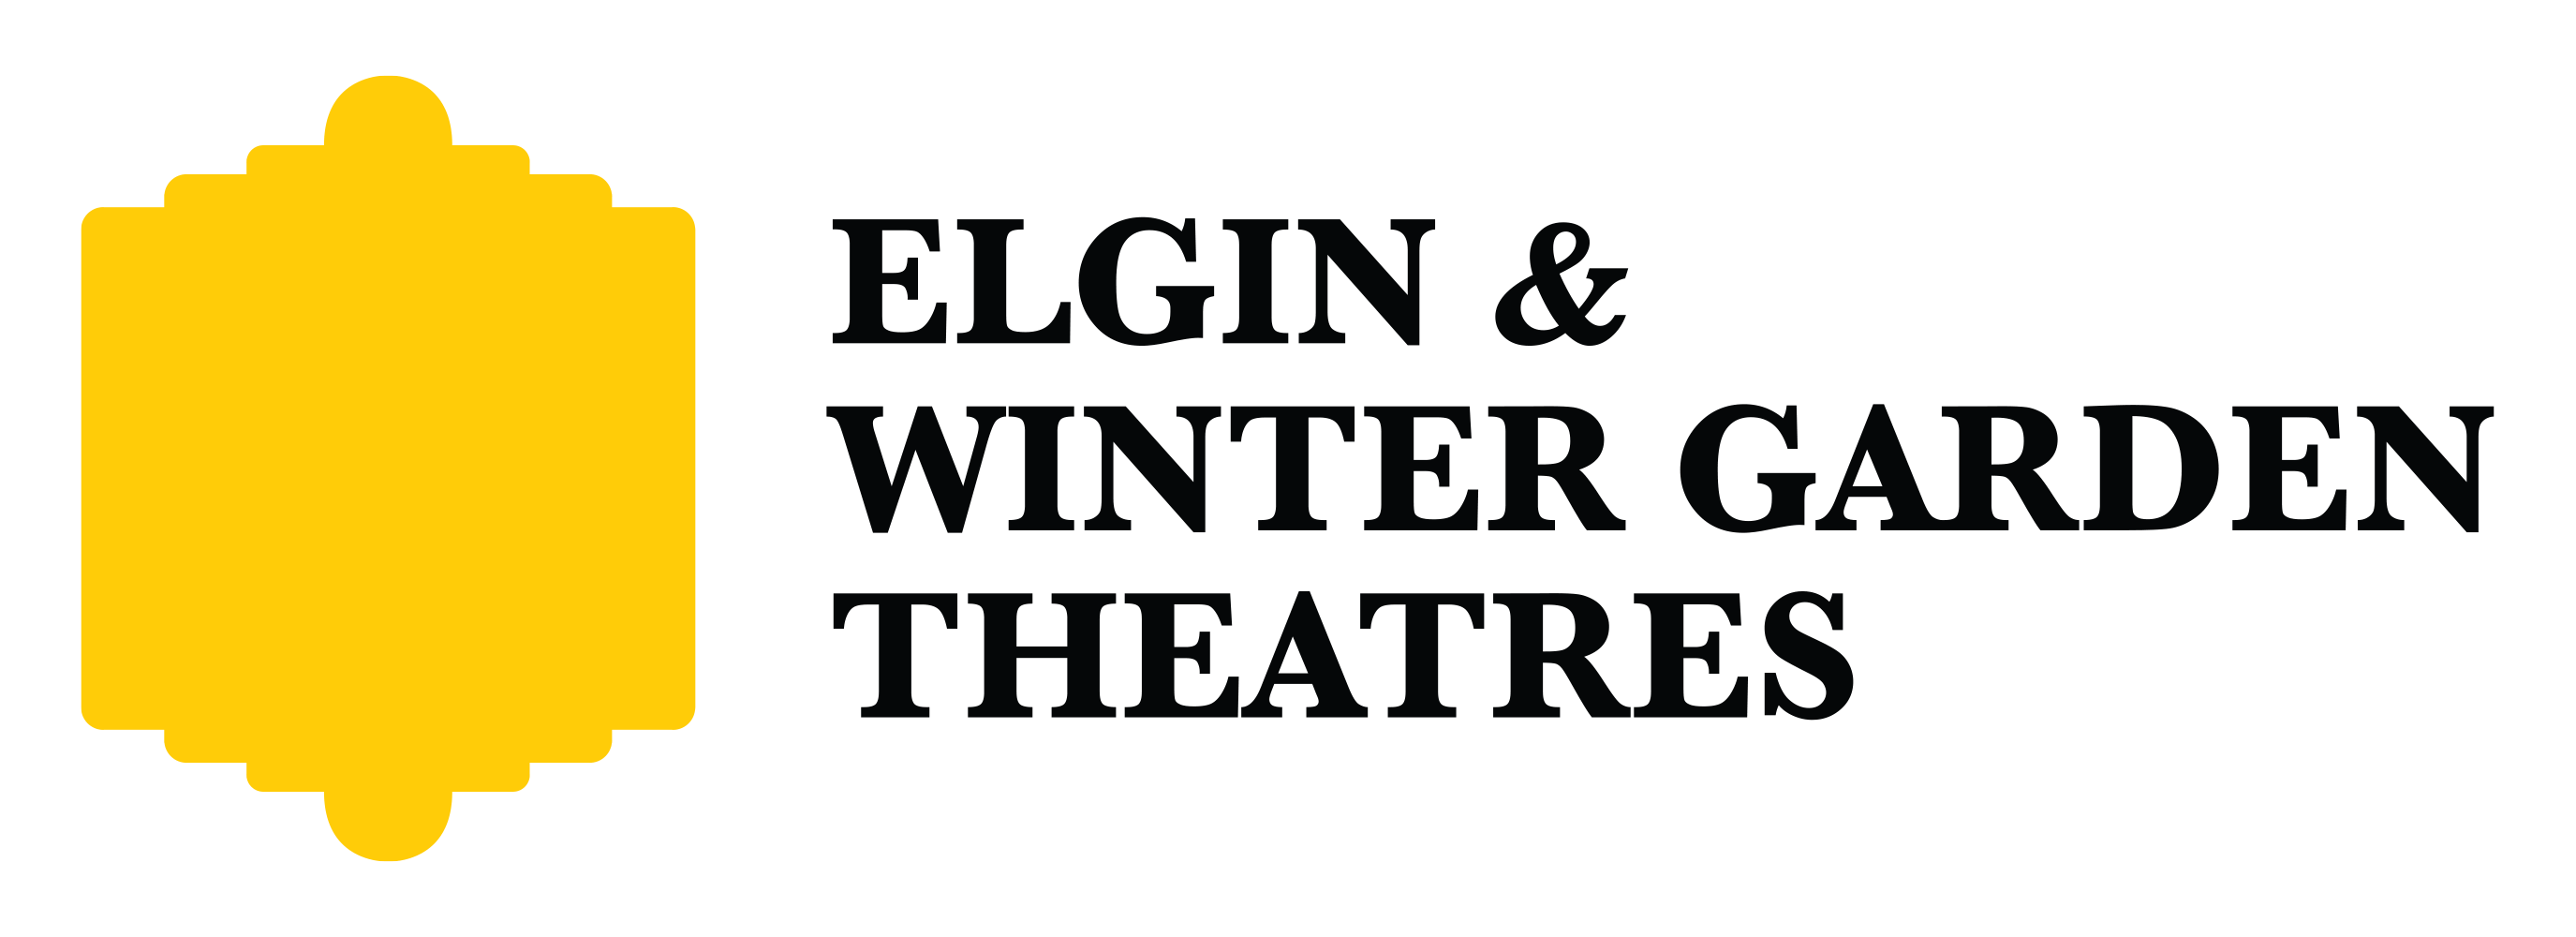 The Elgin and Winter Garden Theatre